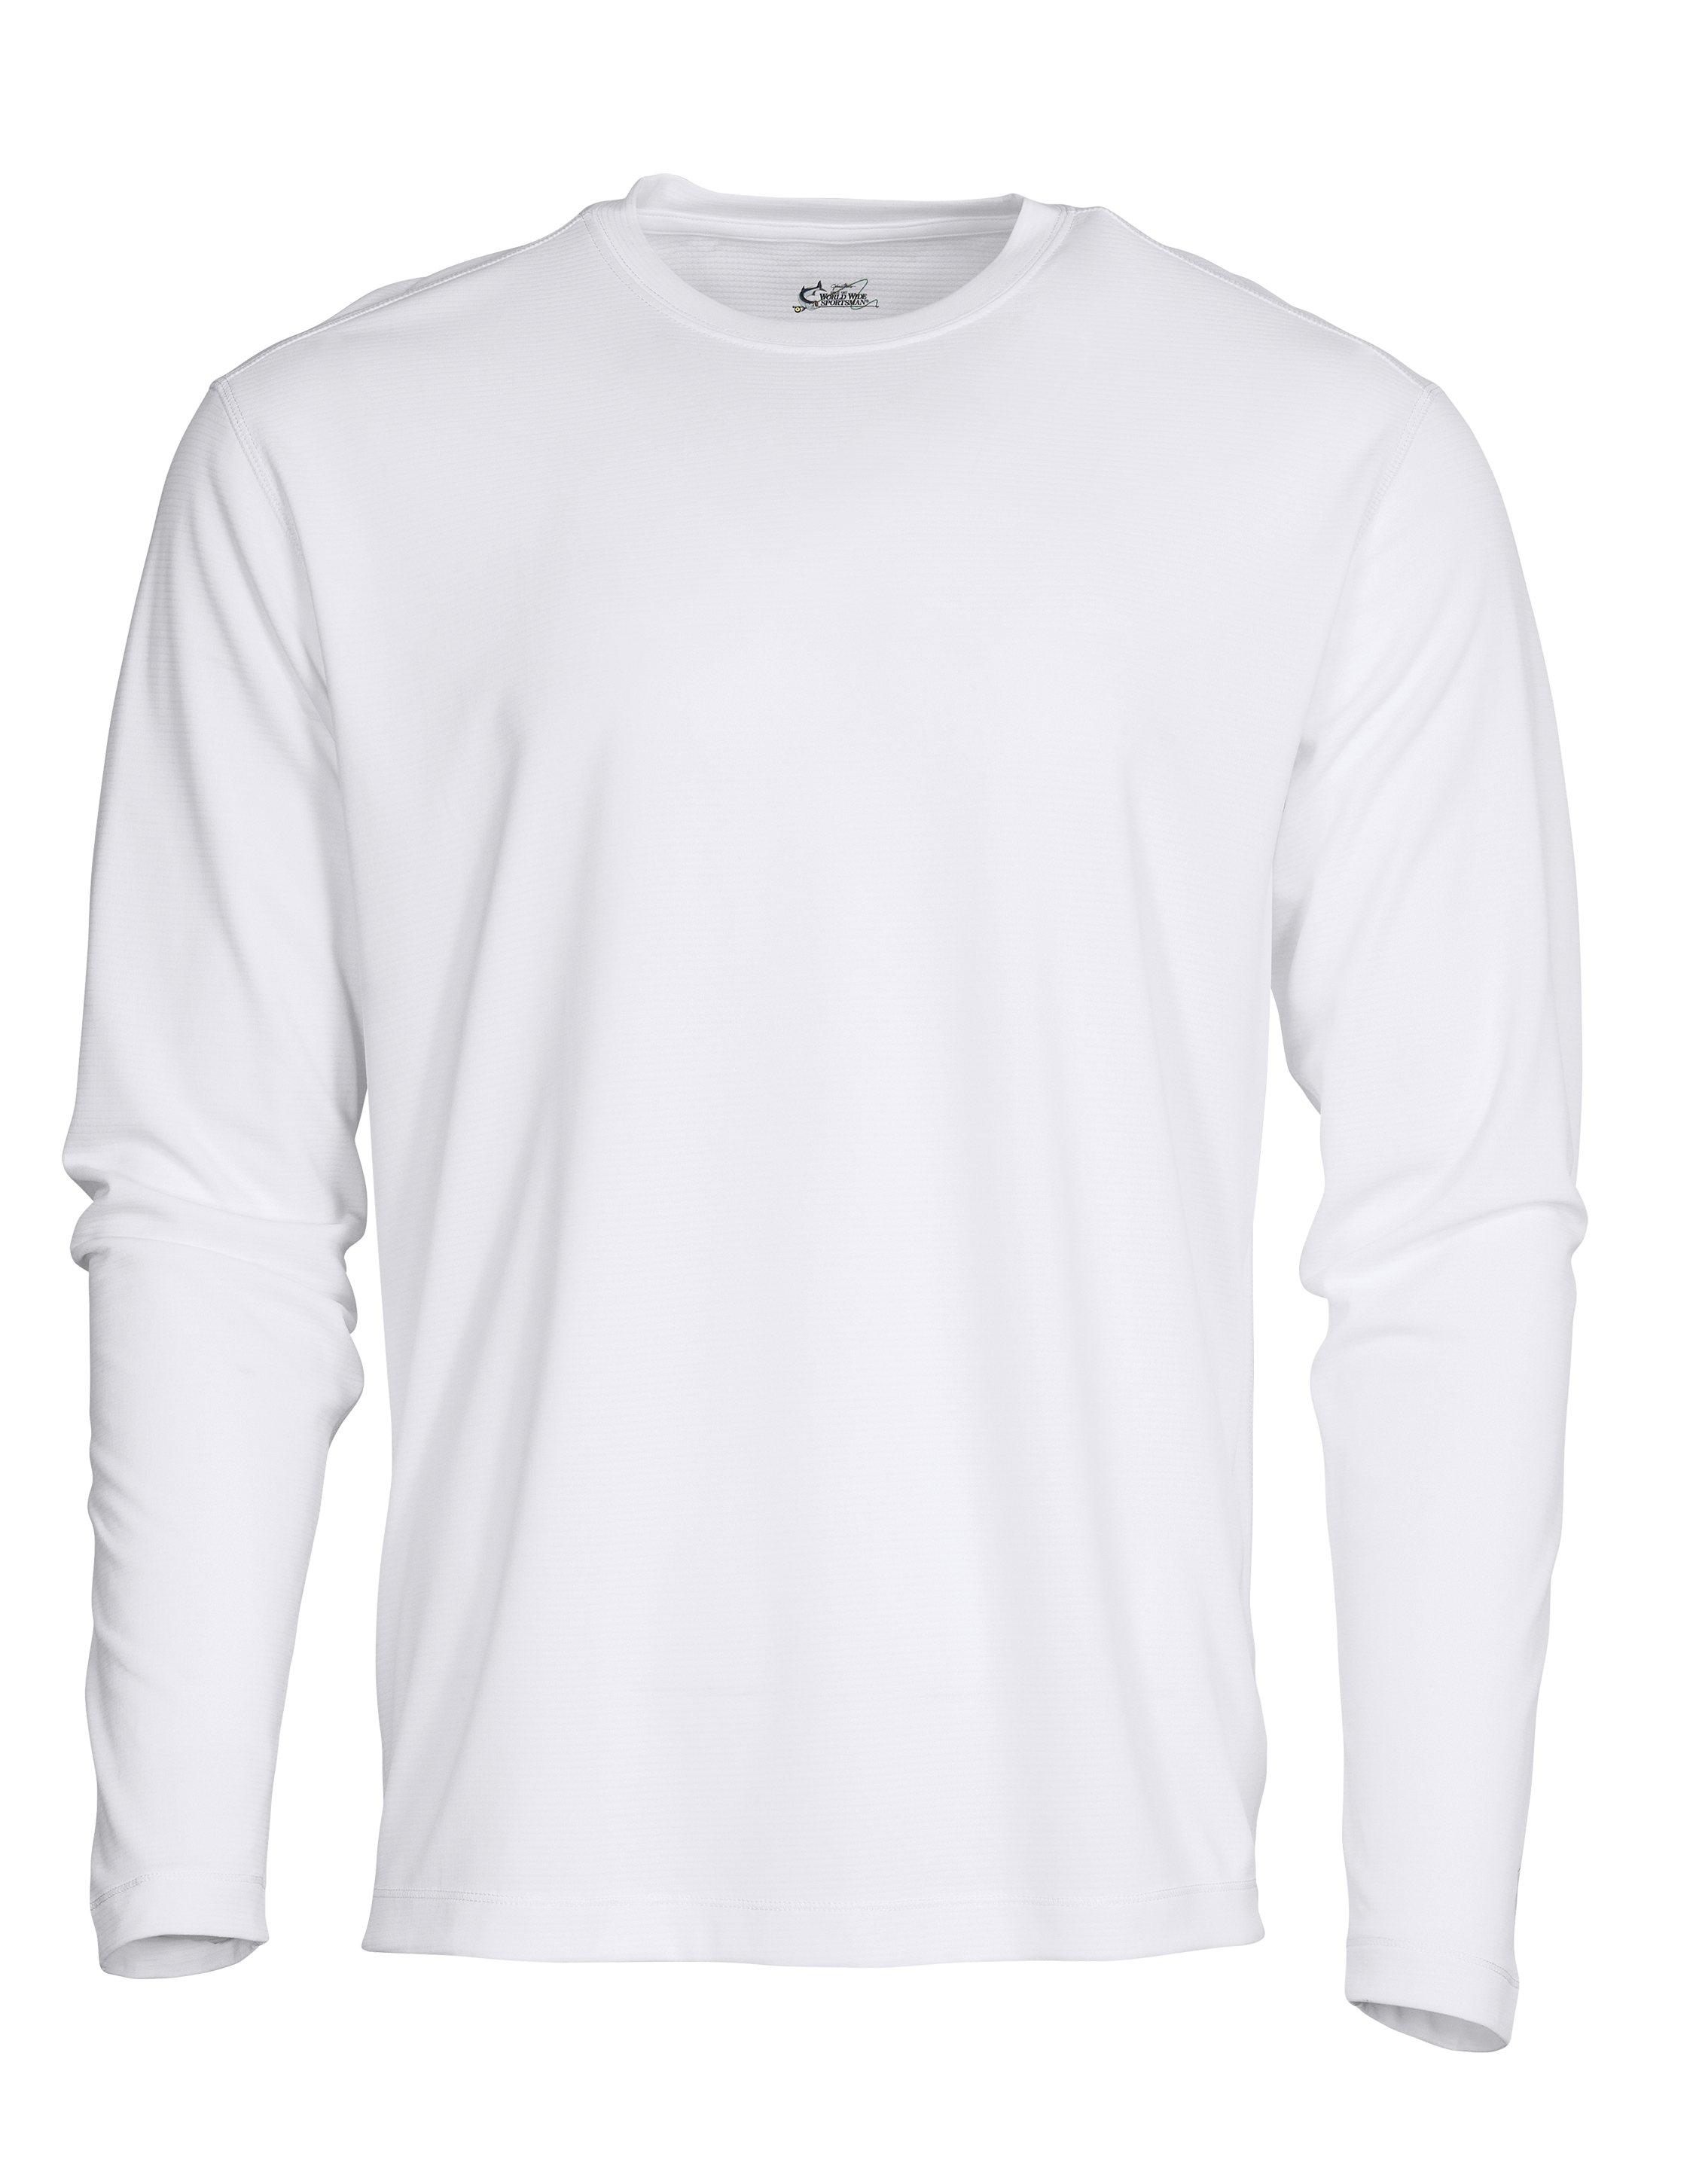 World Wide Sportsman 3D Cool Solid Casting Long-Sleeve T-Shirt for Men